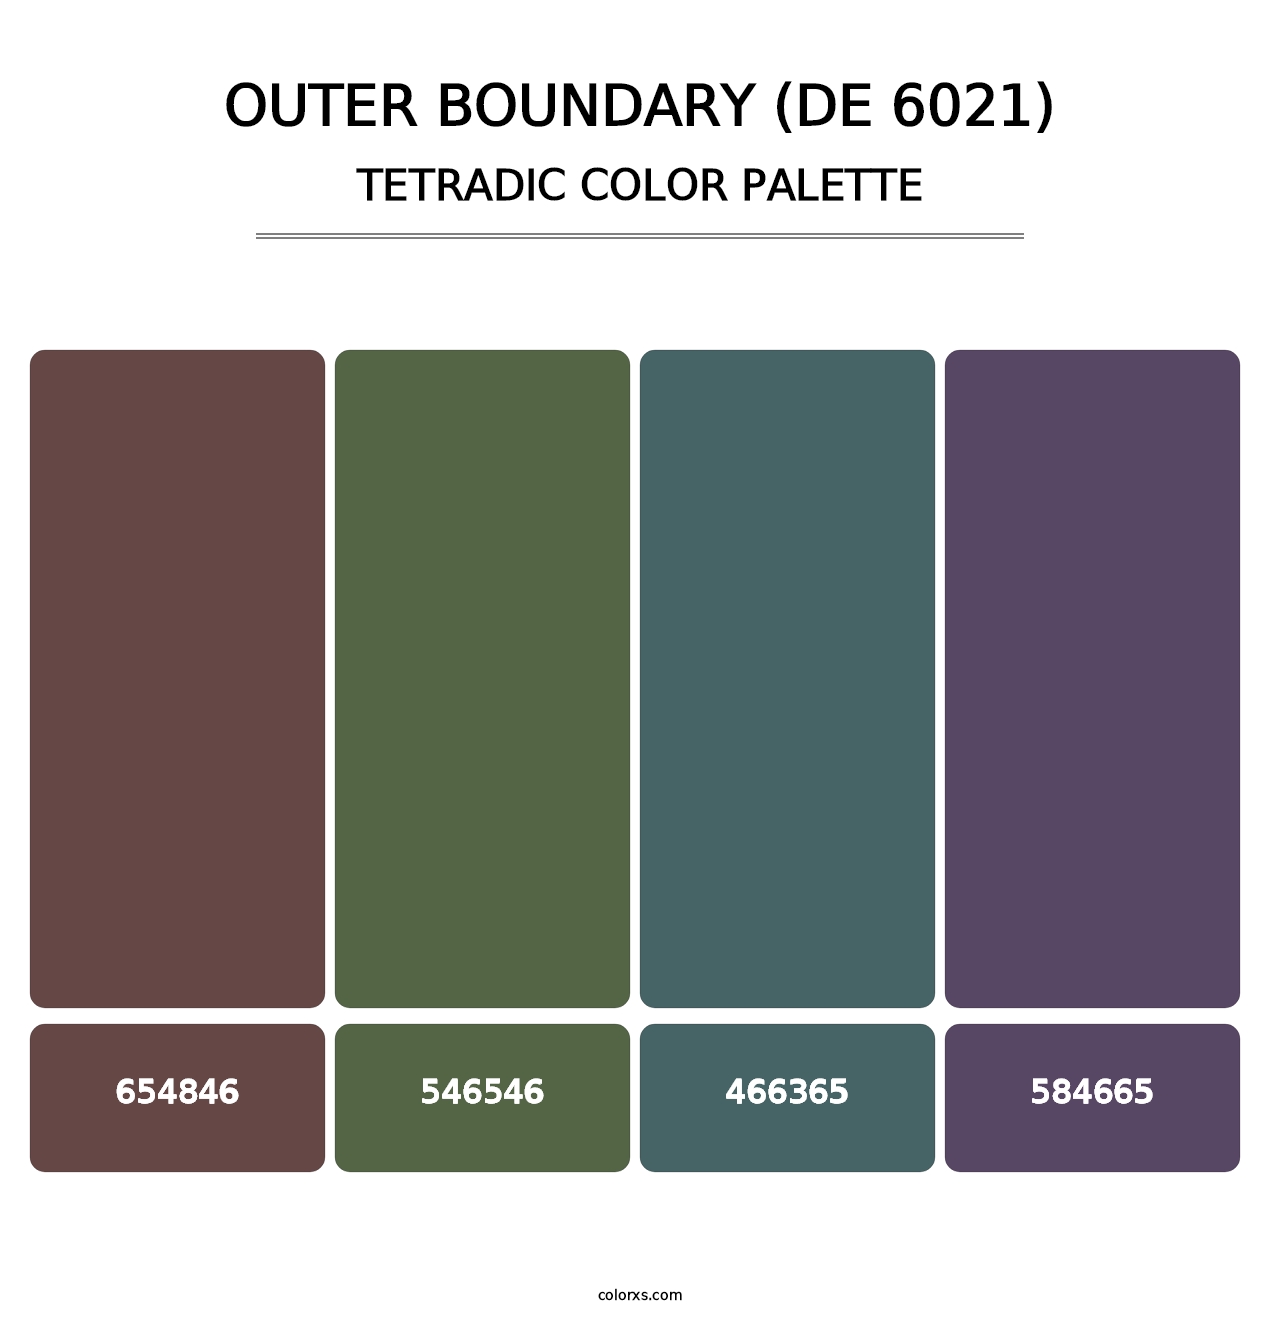 Outer Boundary (DE 6021) - Tetradic Color Palette